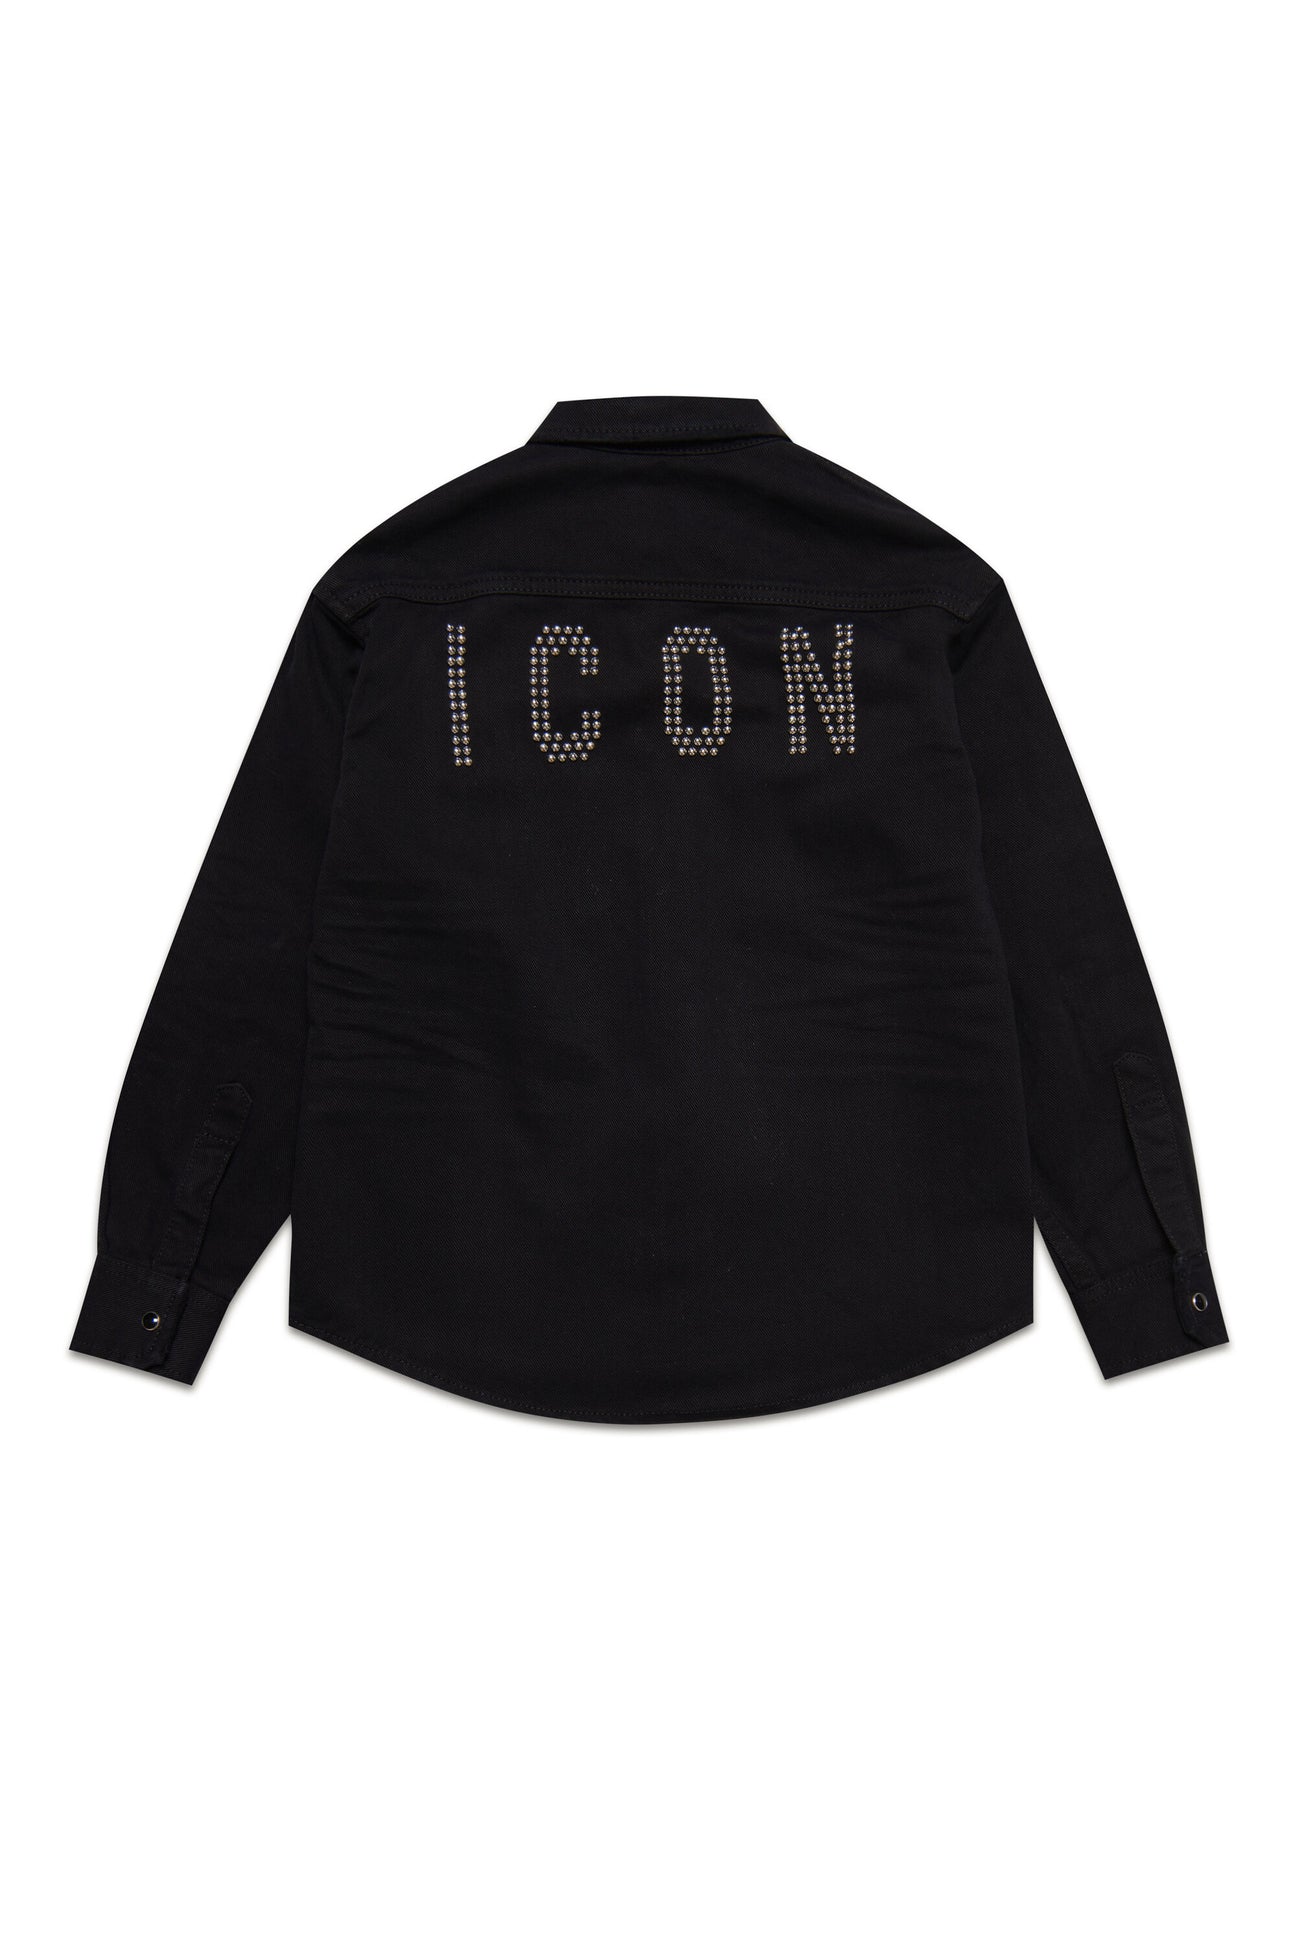 Black denim shirt with Icon Studs logo Black denim shirt with Icon Studs logo